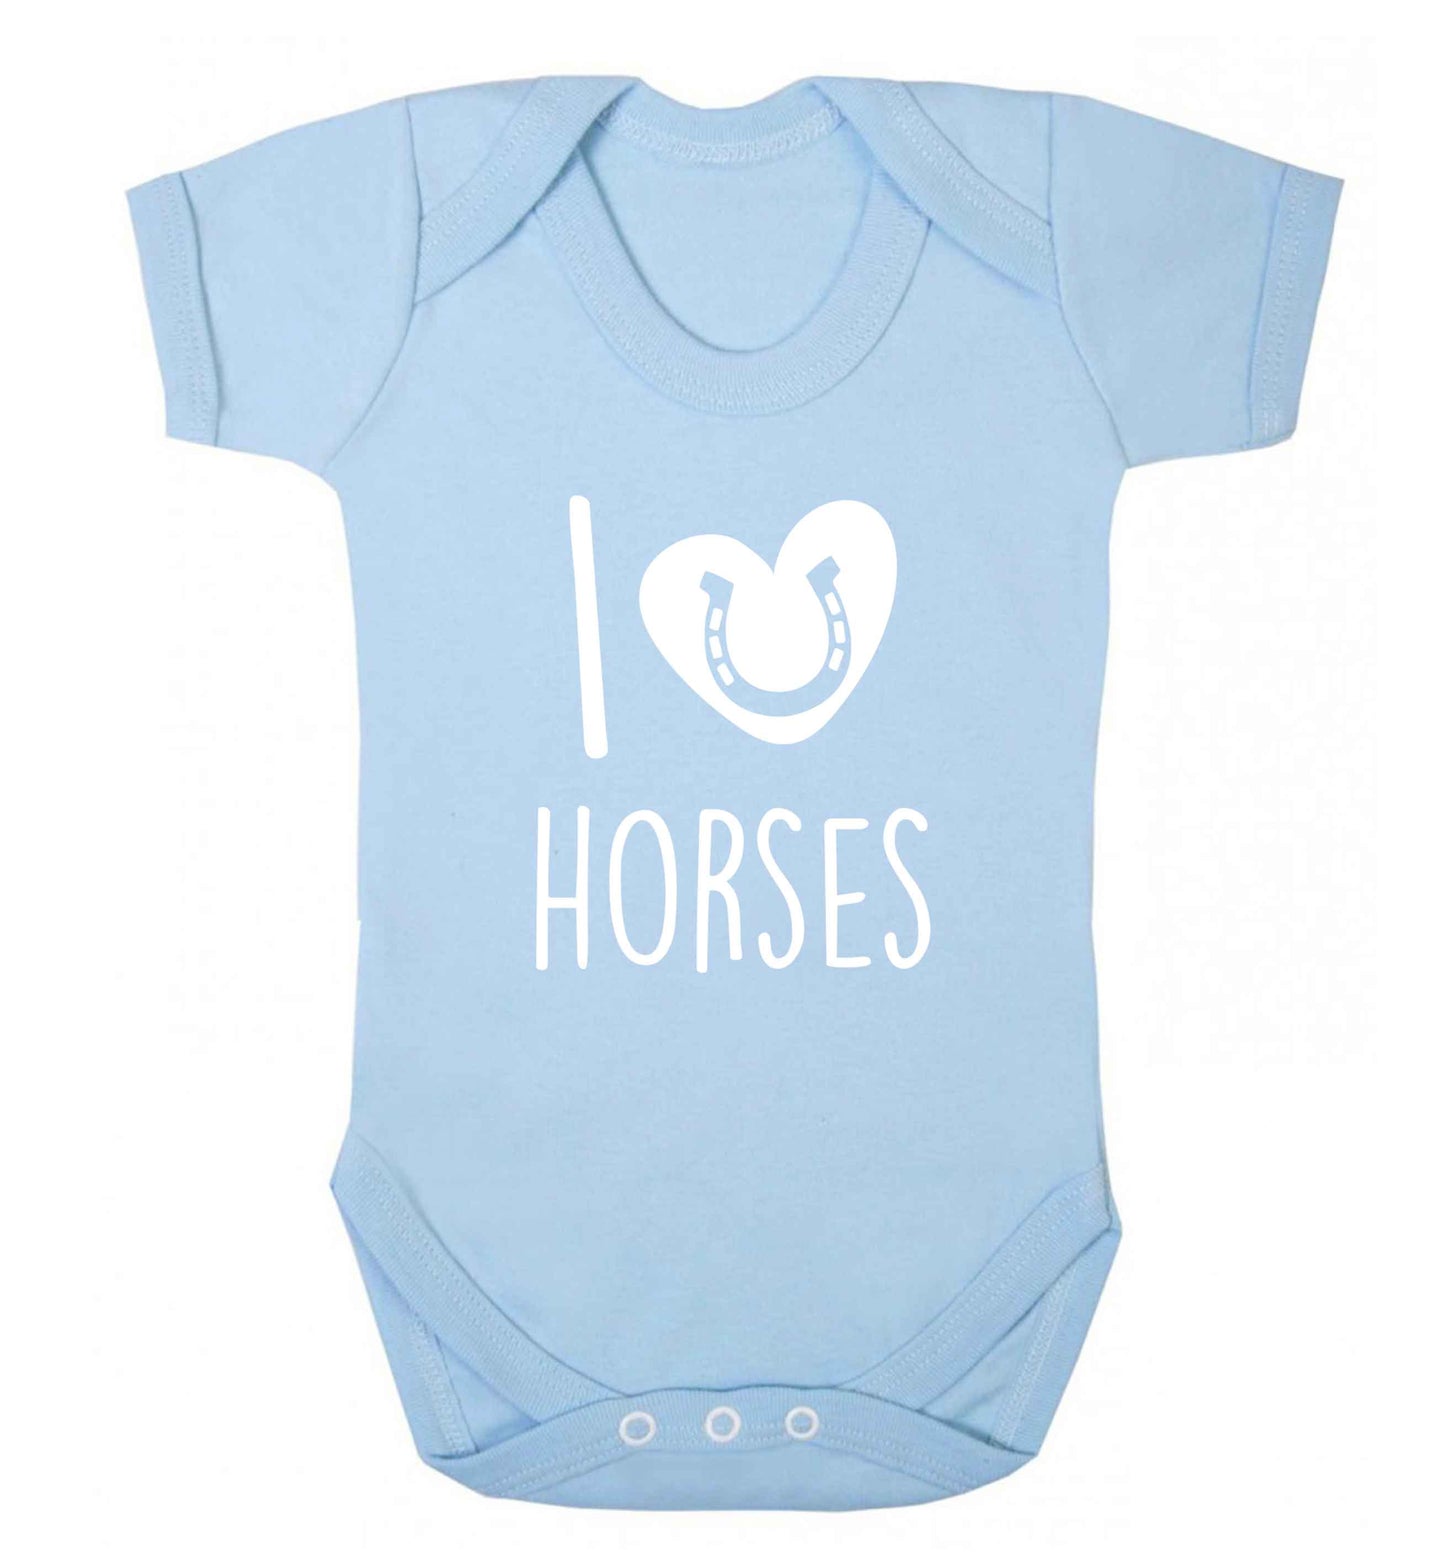 I love horses baby vest pale blue 18-24 months